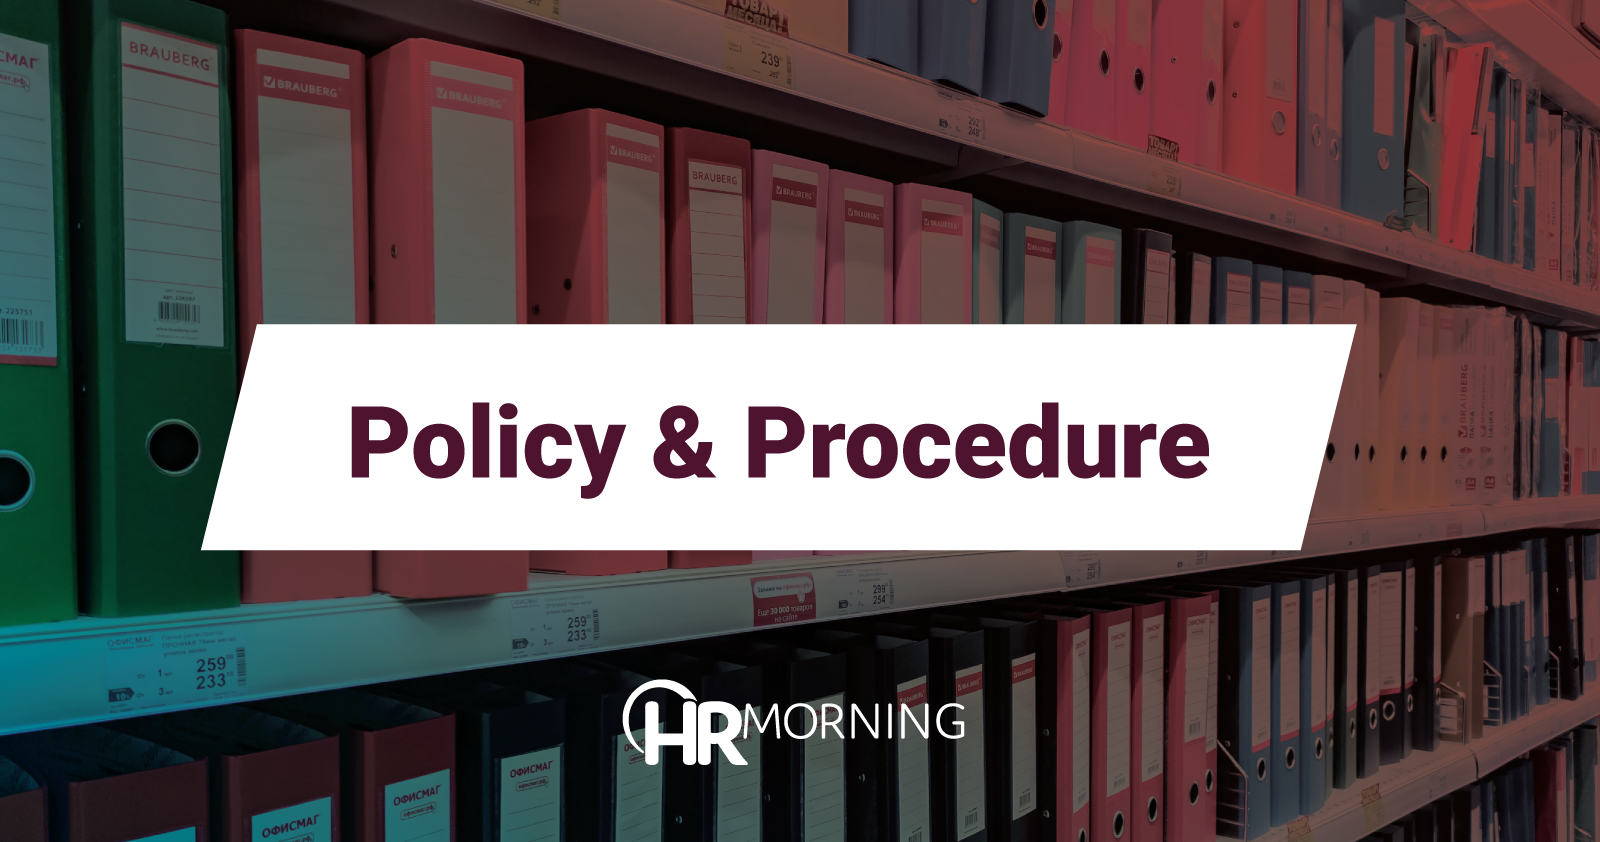 Policy & Procedure